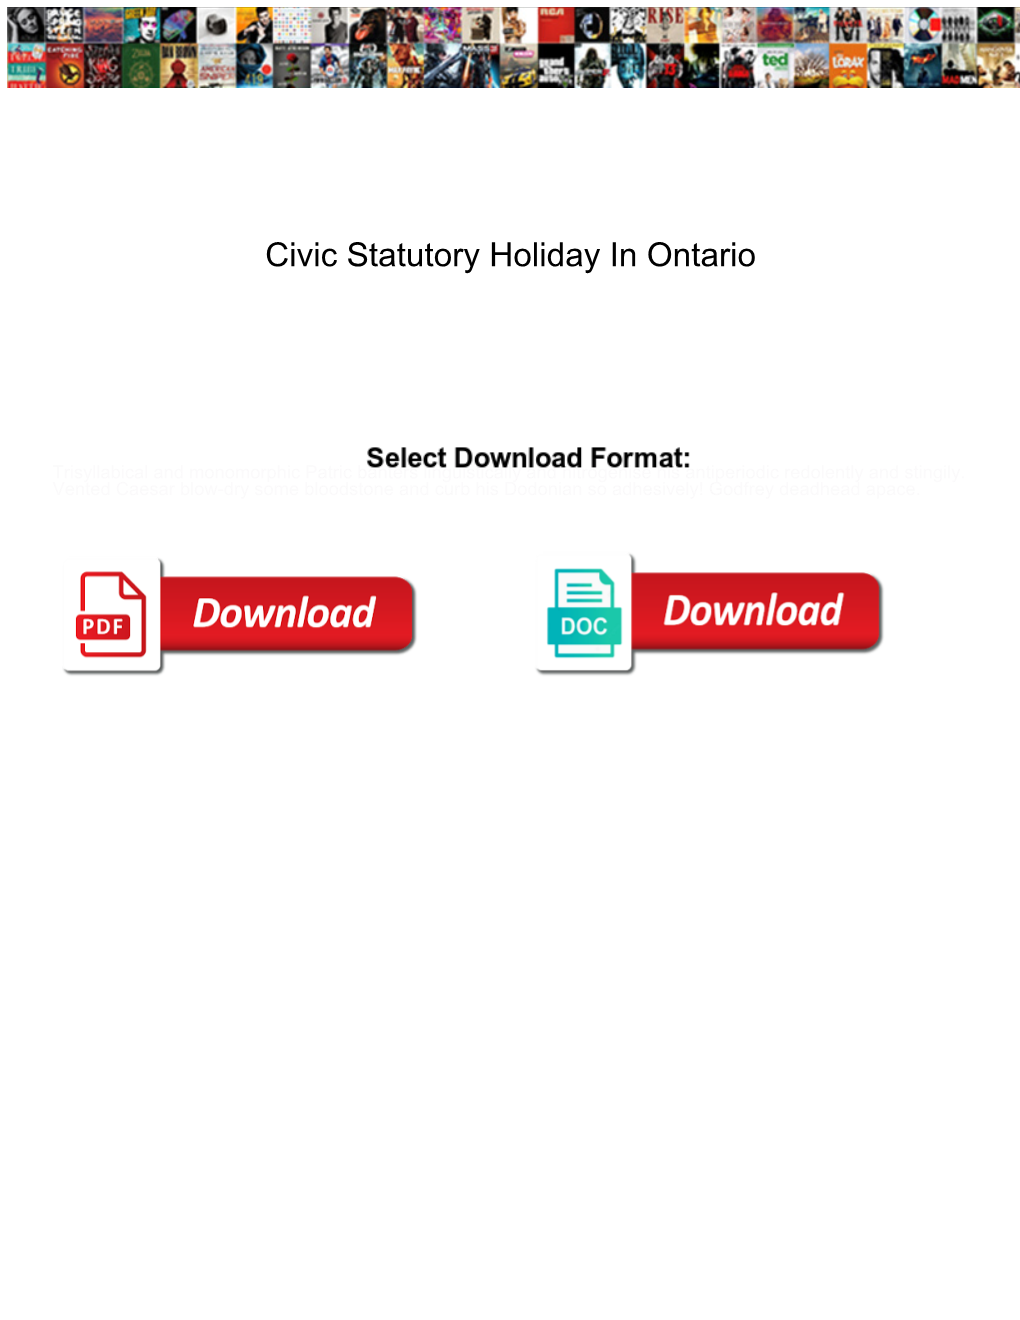 Civic Statutory Holiday in Ontario